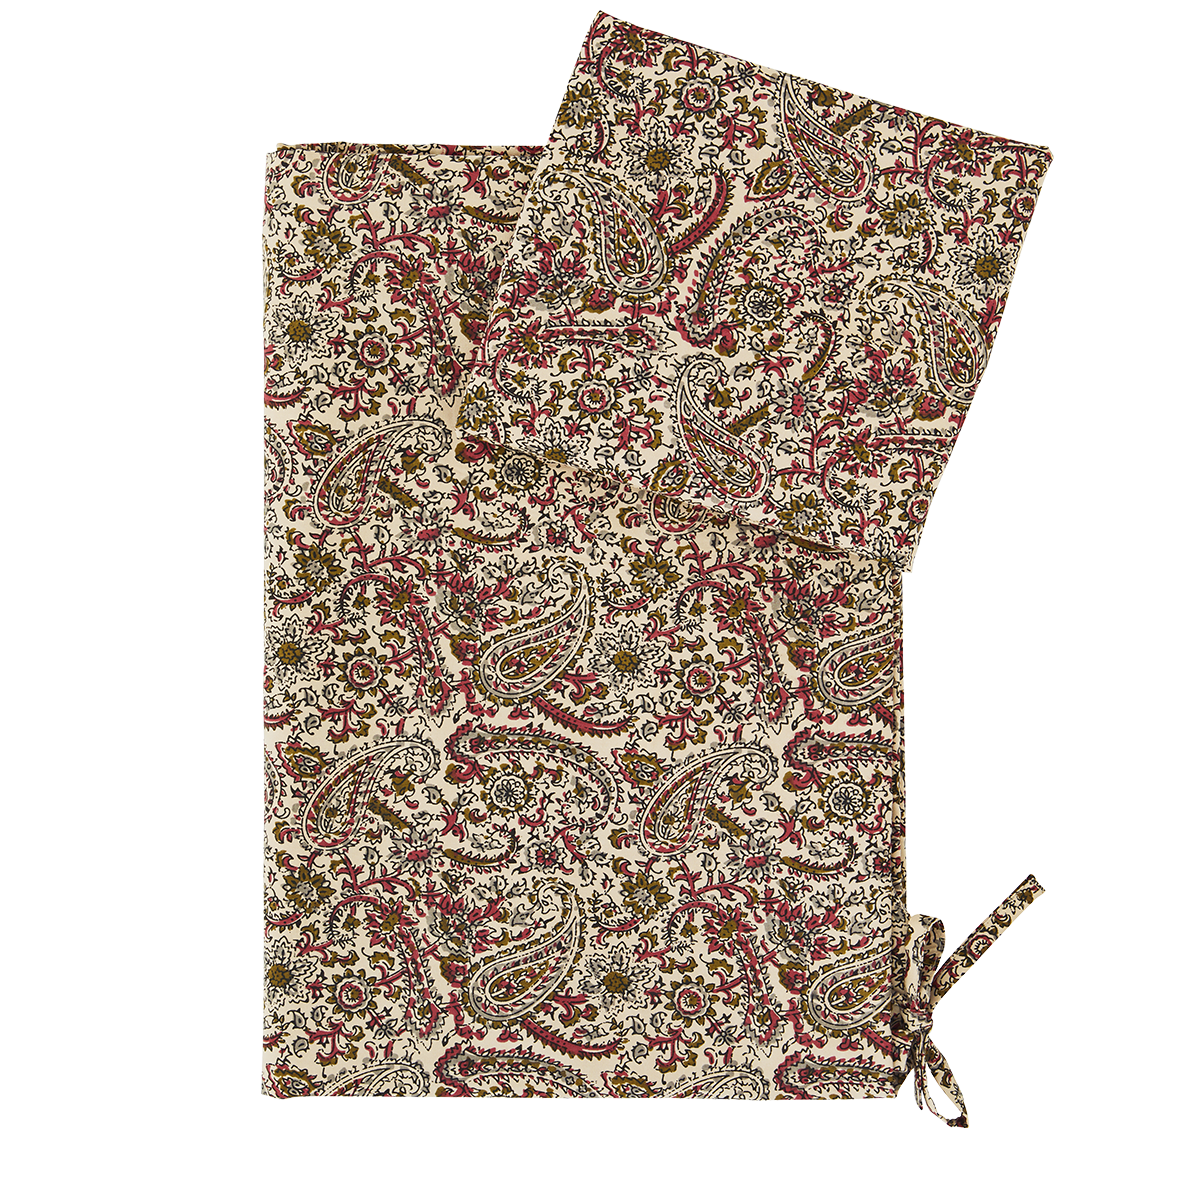 Printed cotton duvet cover